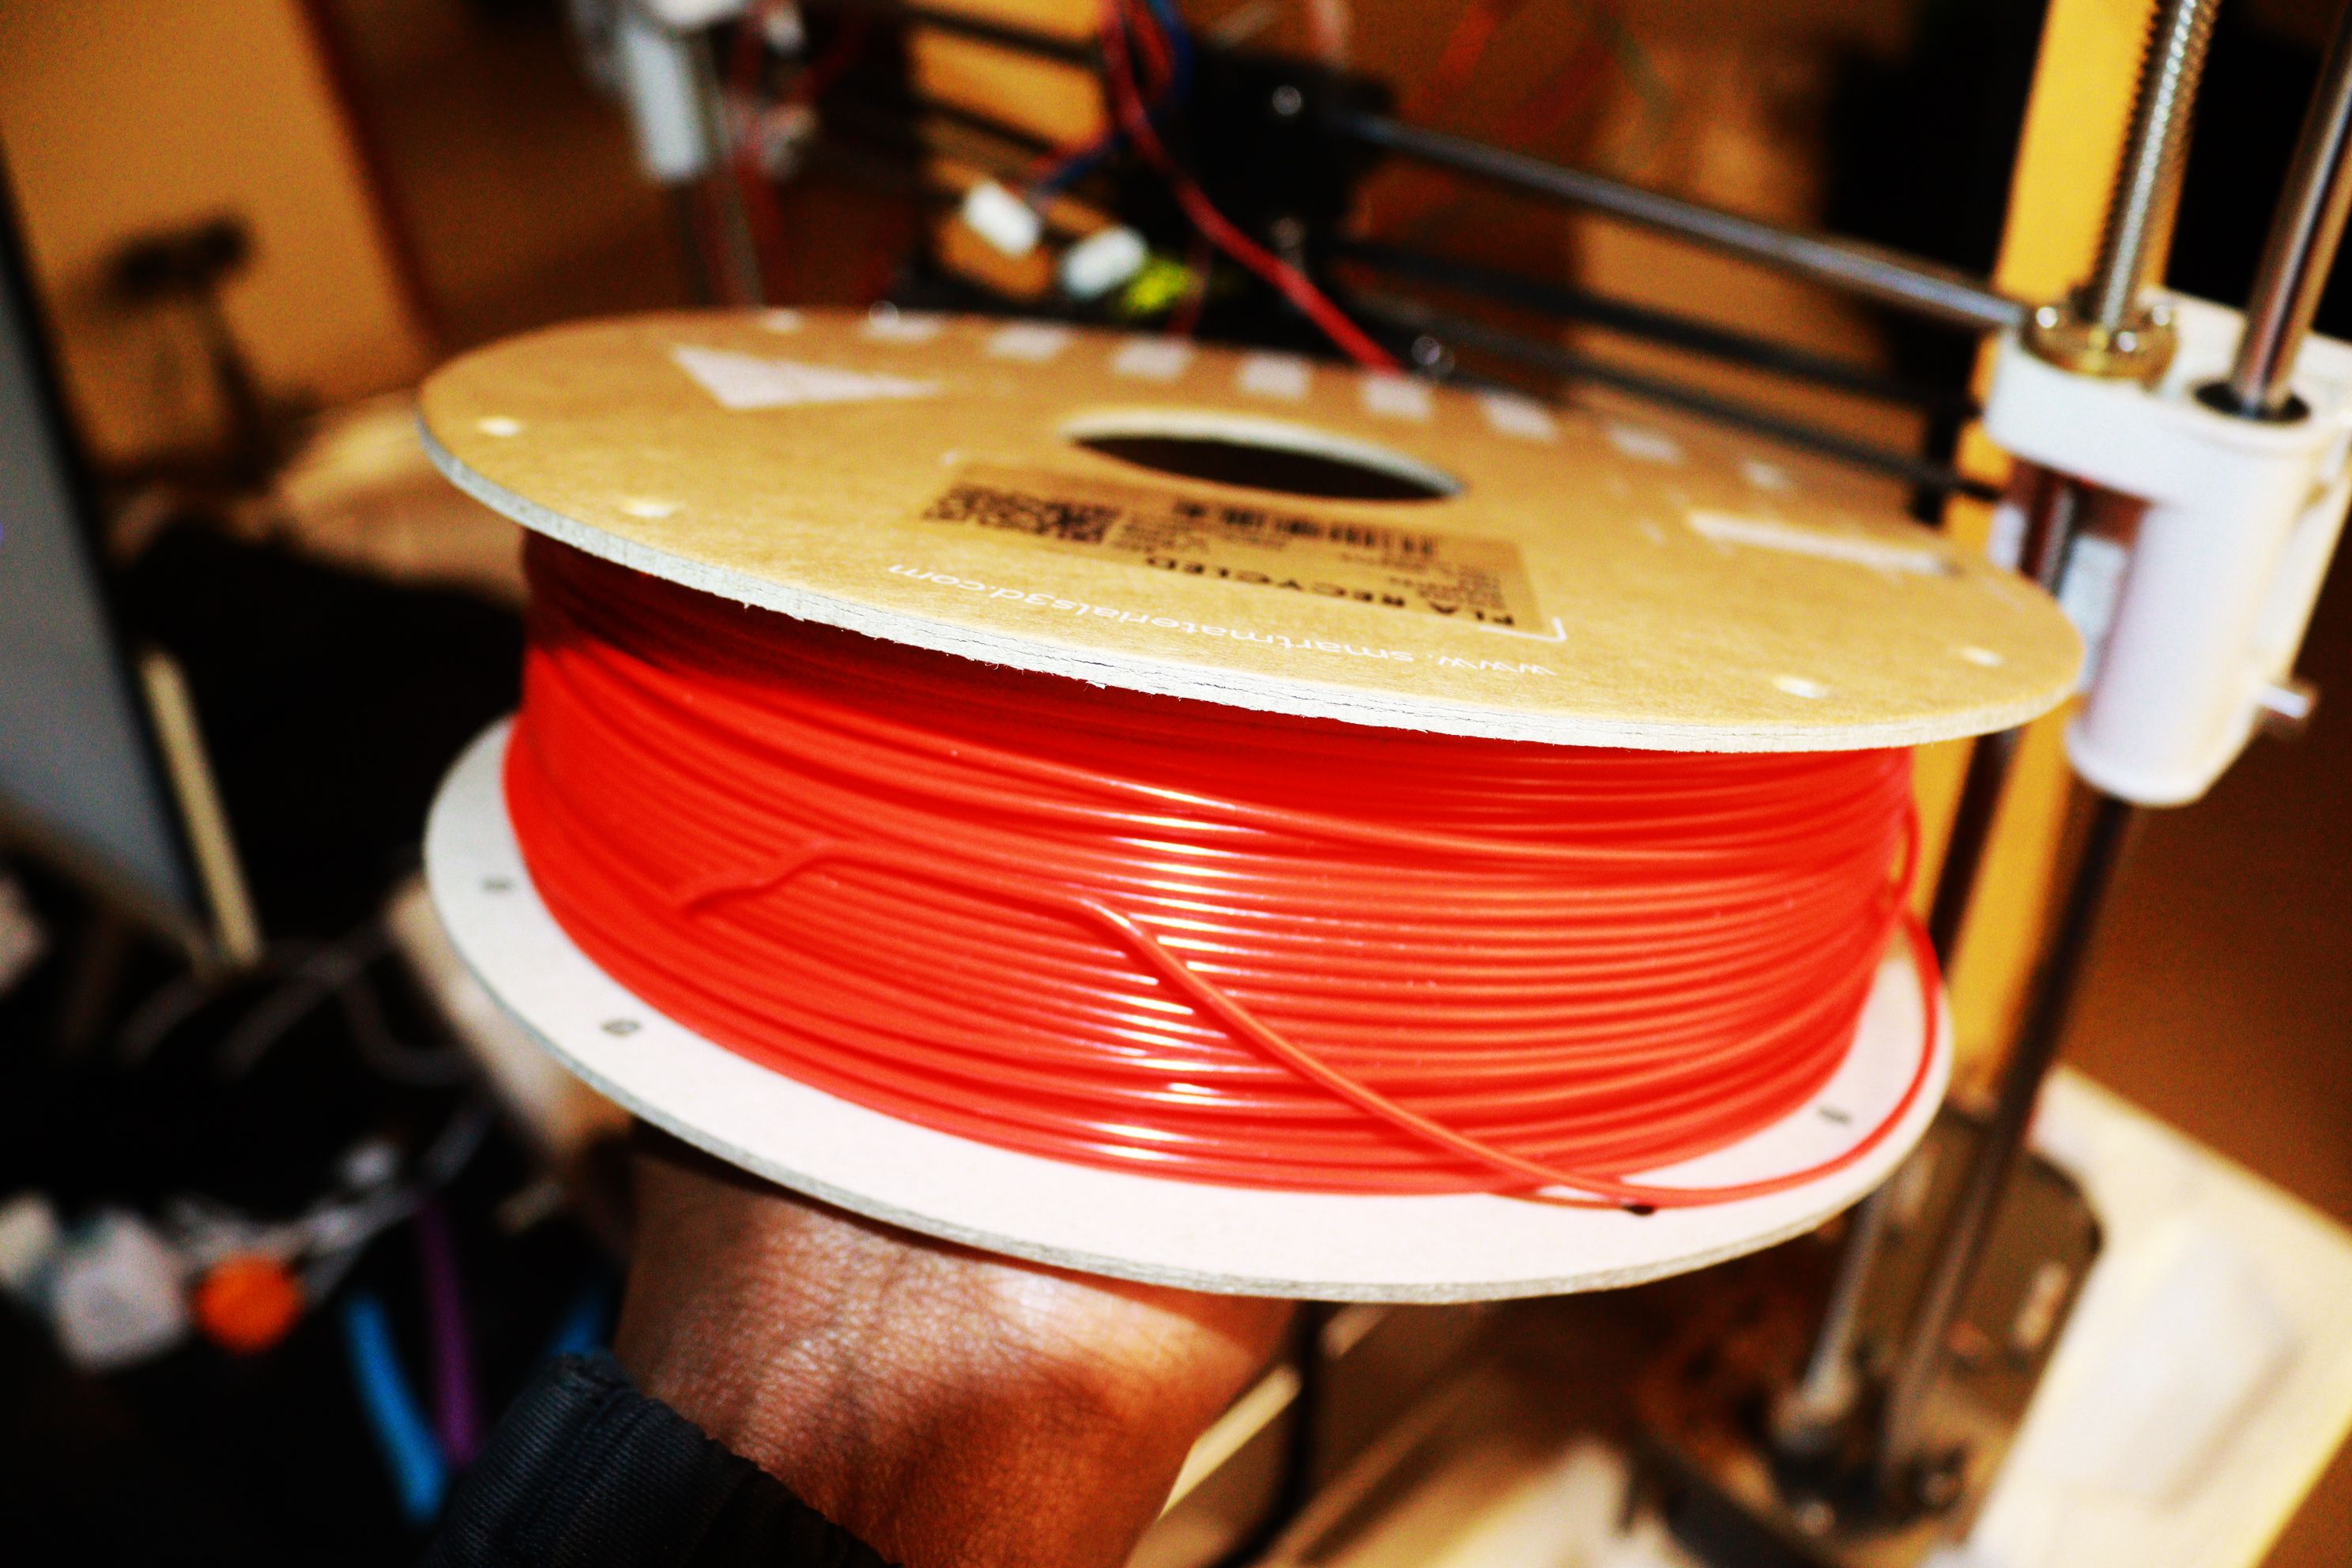 Red PLA filament